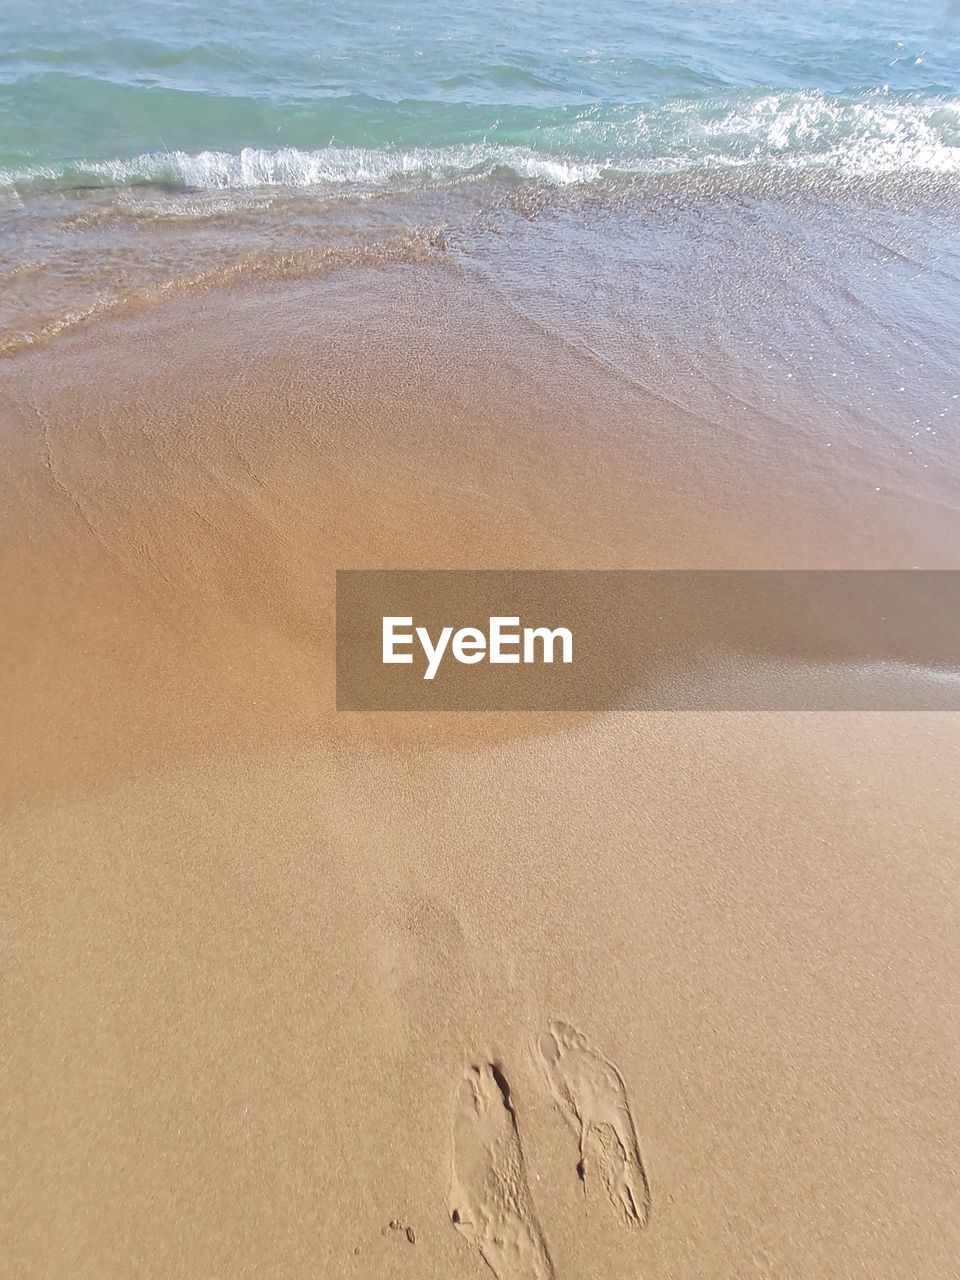 HIGH ANGLE VIEW OF FOOTPRINT ON BEACH